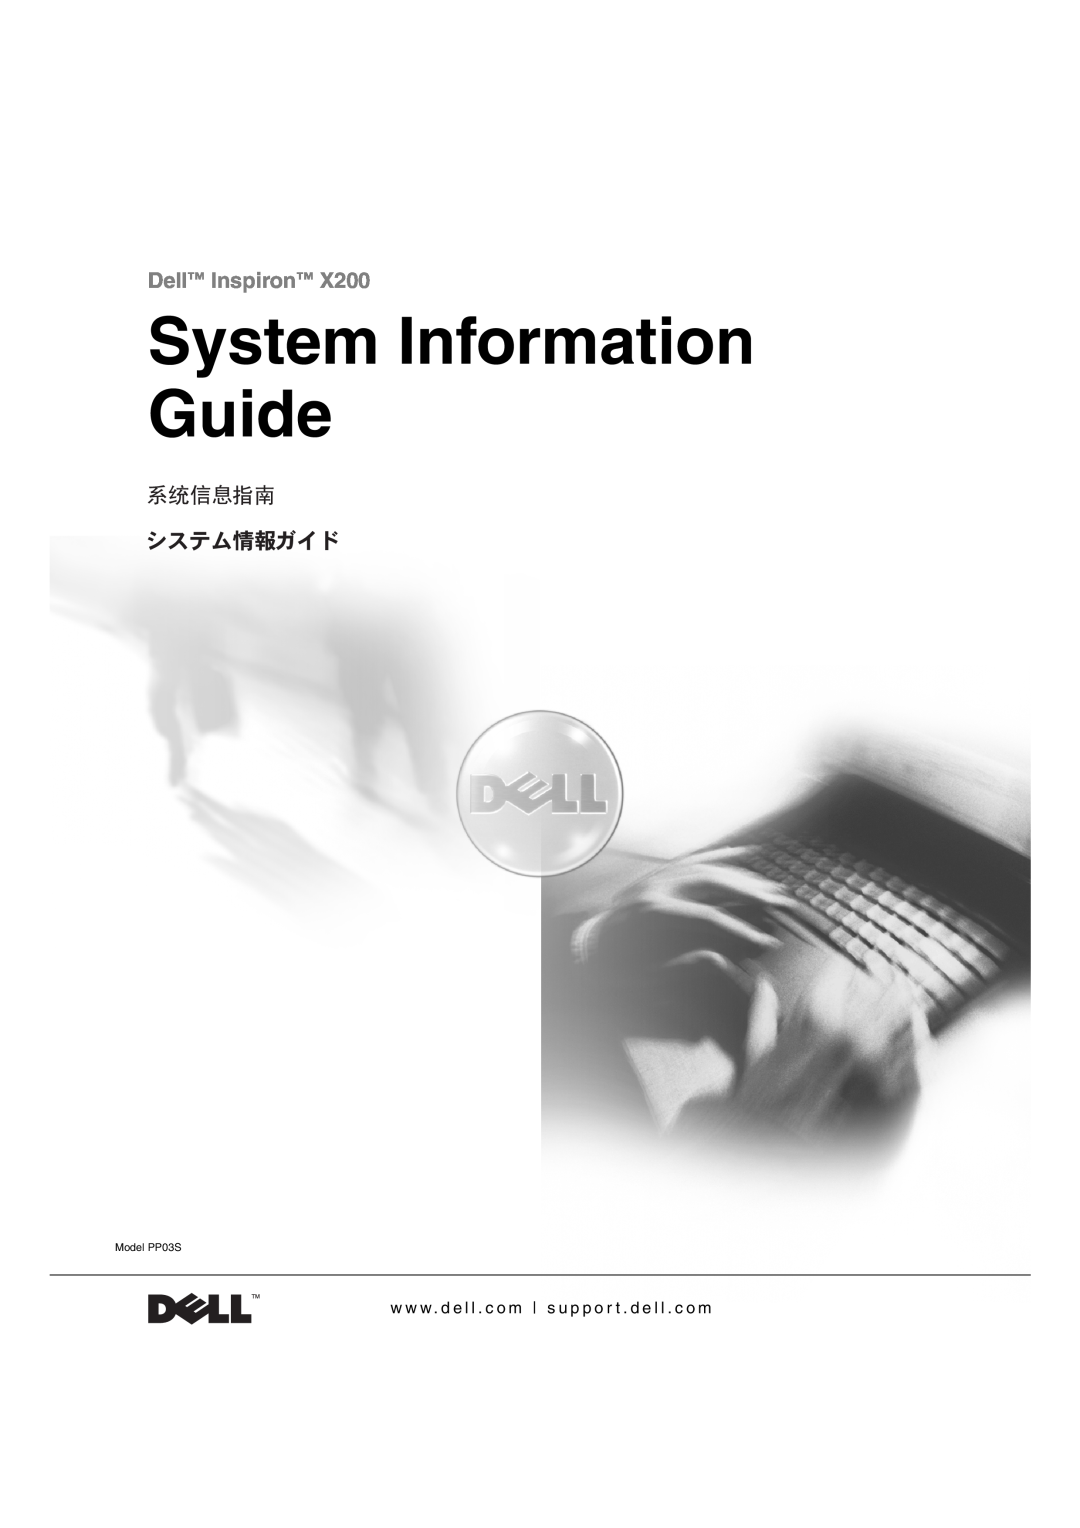 Dell PP03S manual Dell Inspiron, System Information Guide, w w w . d e l l . c o m s u p p o r t . d e l l . c o m 